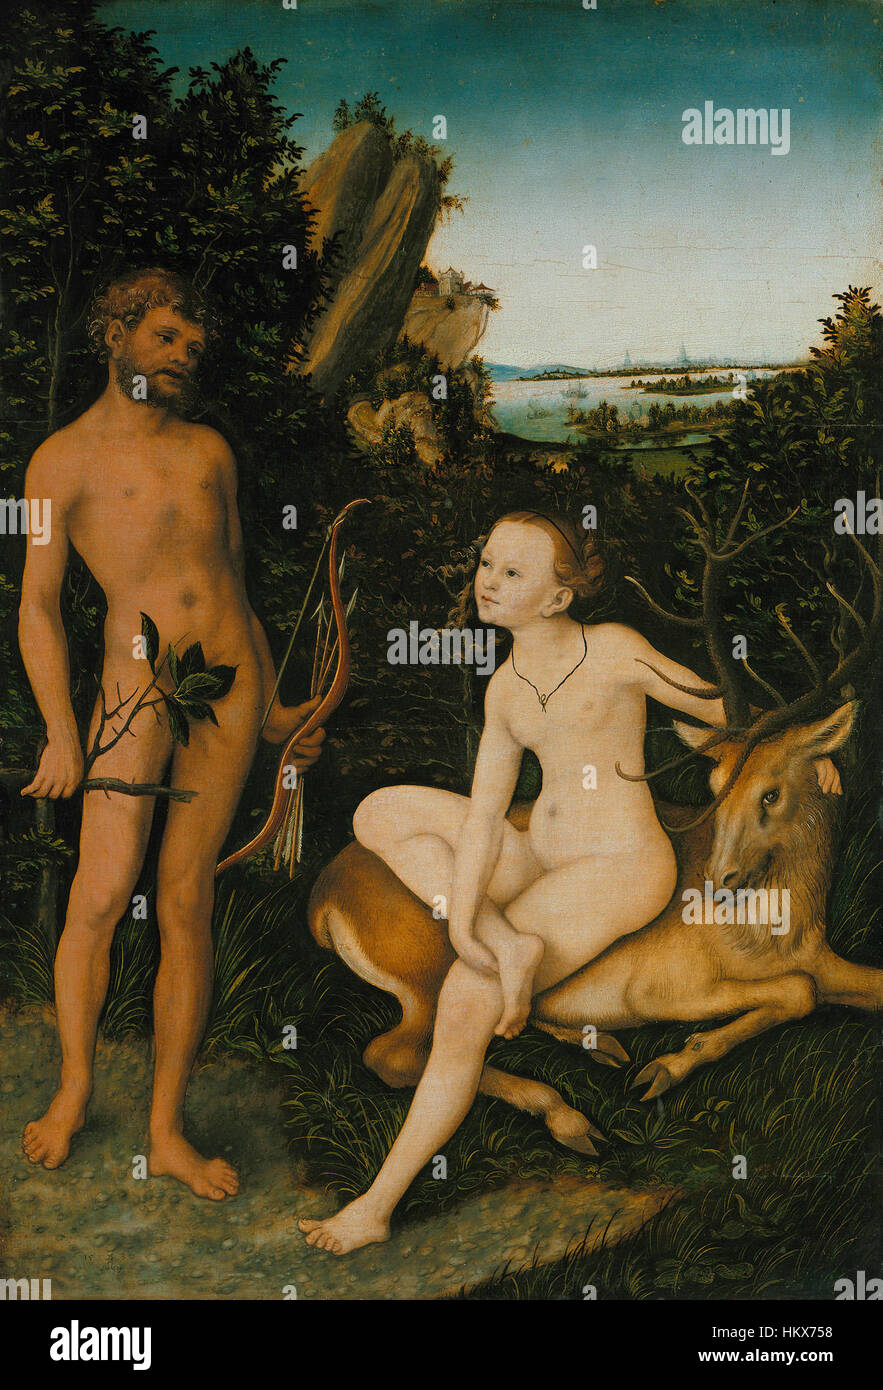 Lucas Cranach il Vecchio - Apoll und Diana in waldiger Landschaft - Google Art Project Foto Stock